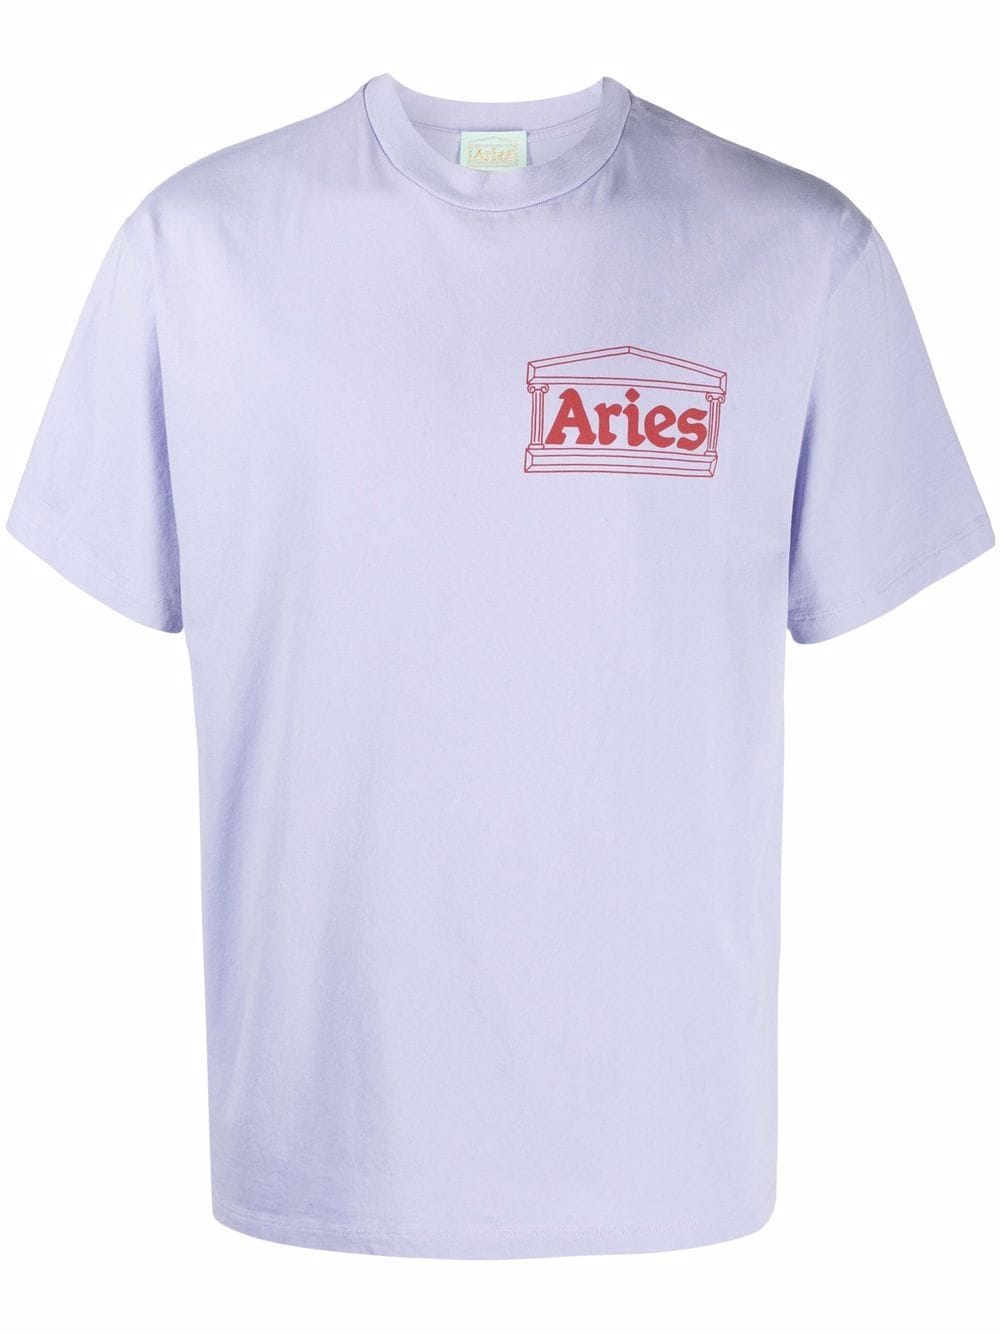 фото Aries футболка с принтом